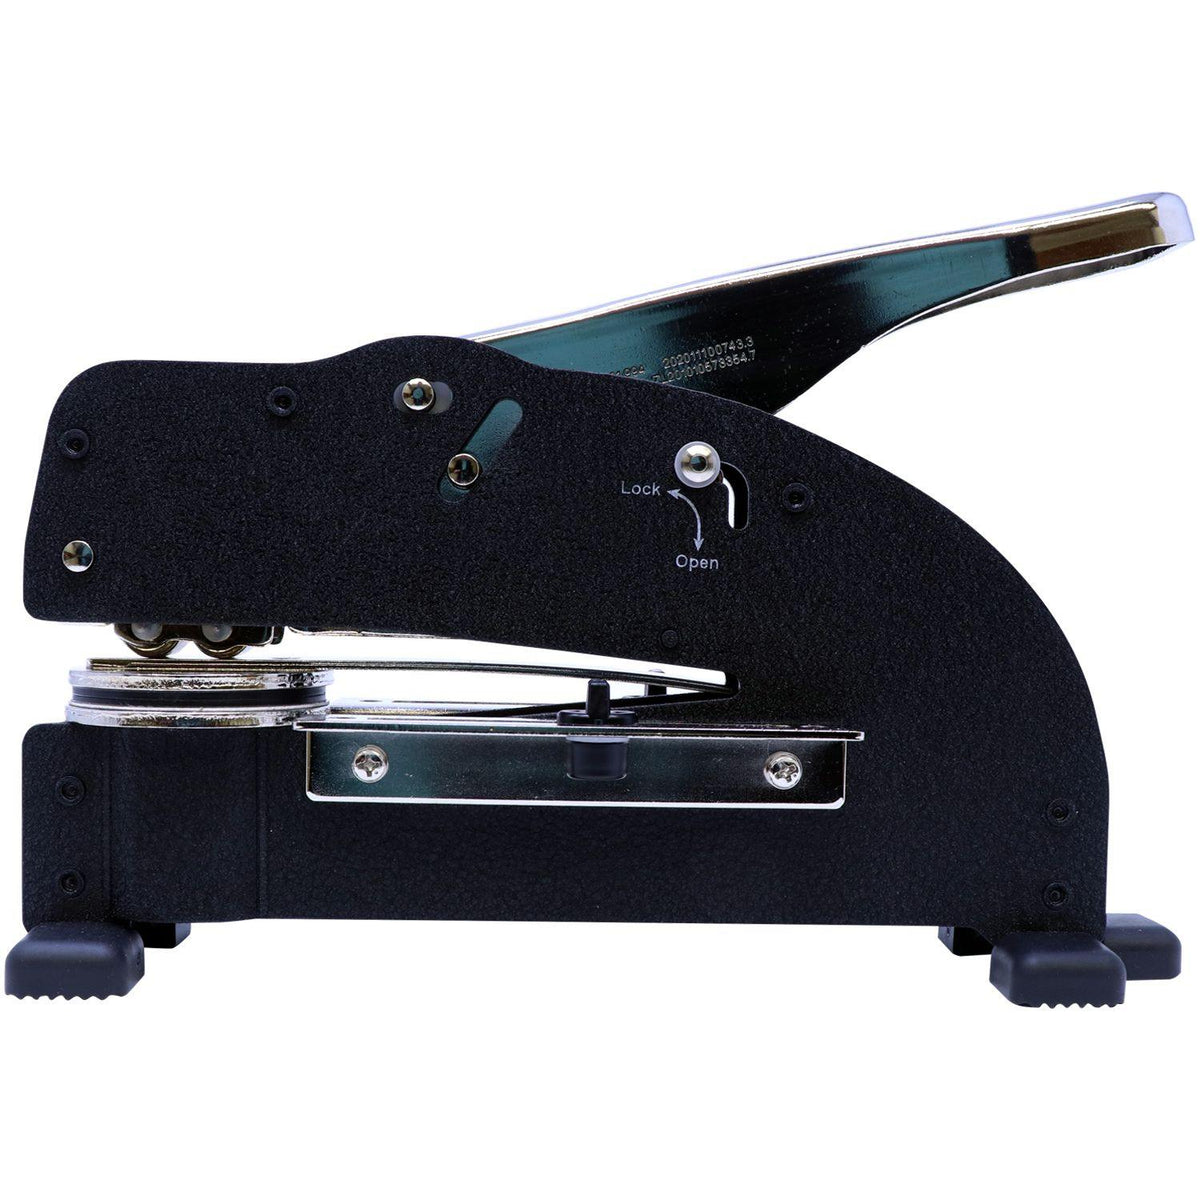 Professional Extended Long Reach Desk Seal Embosser - Engineer Seal Stamps - Embosser Type_Desk, Embosser Type_Extended Long Reach, Type of Use_Professional, Use_Heavy Duty